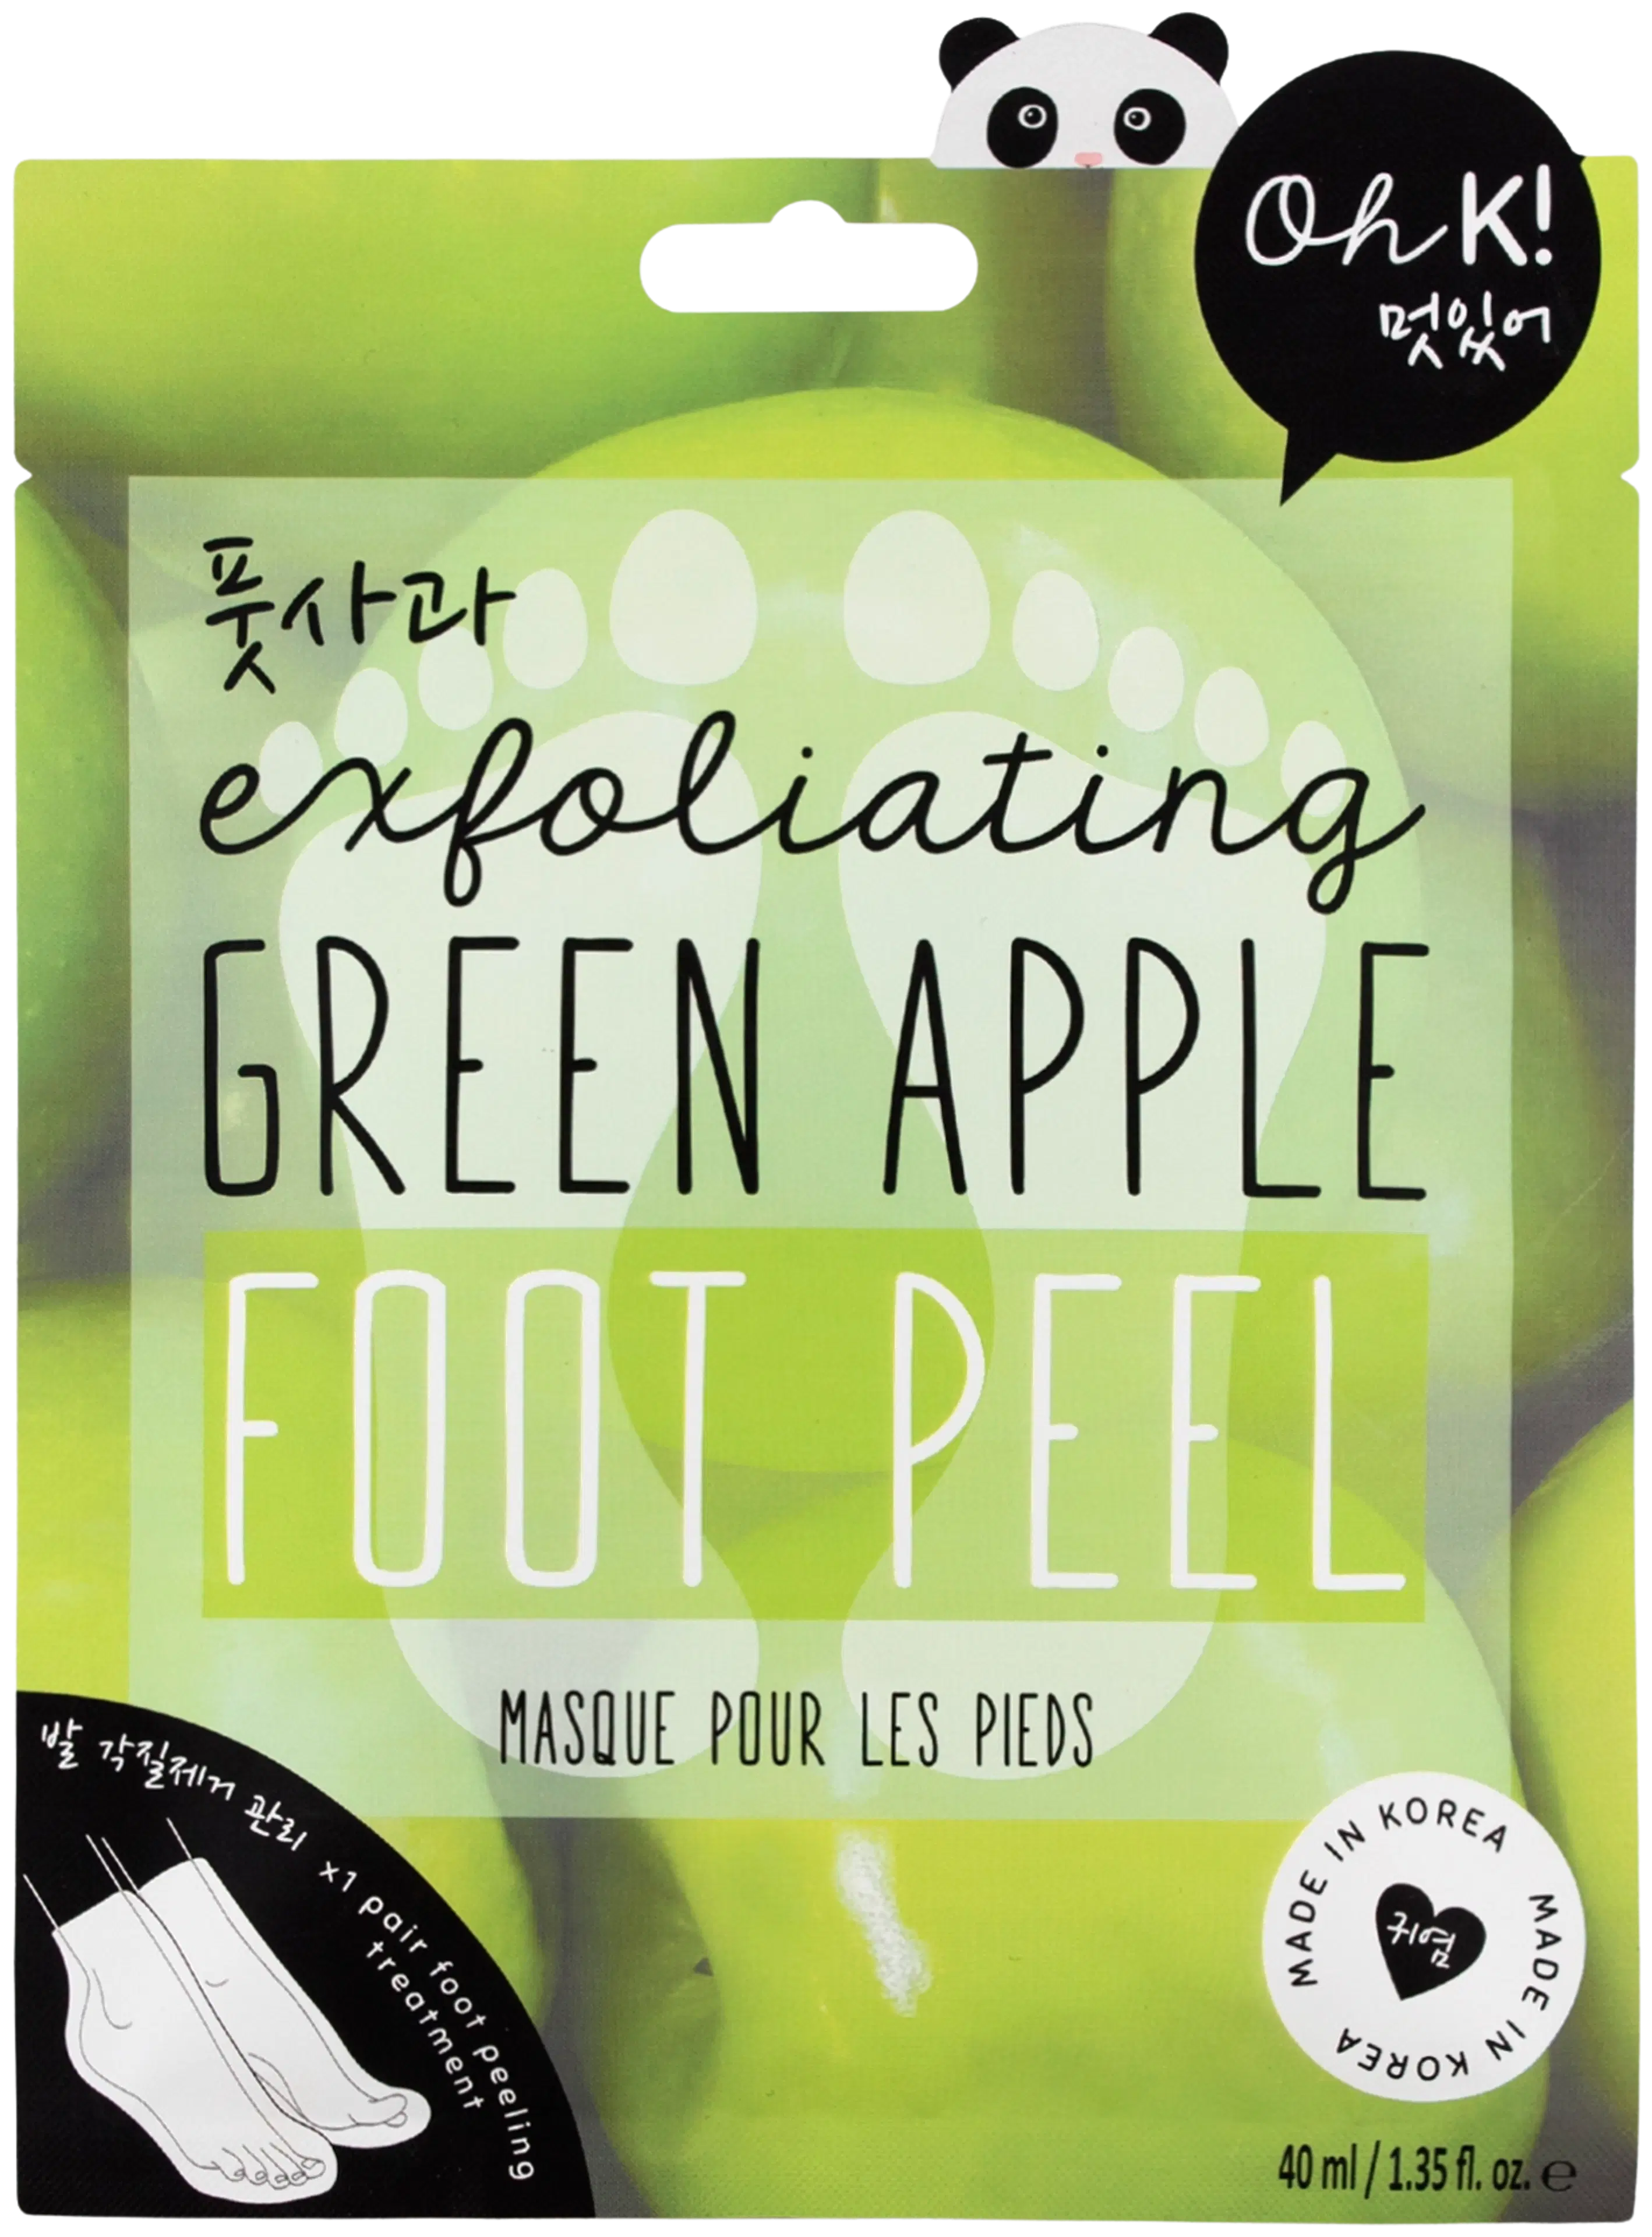 Oh K! Green Apple Foot Peel jalkojen kuorintasukat